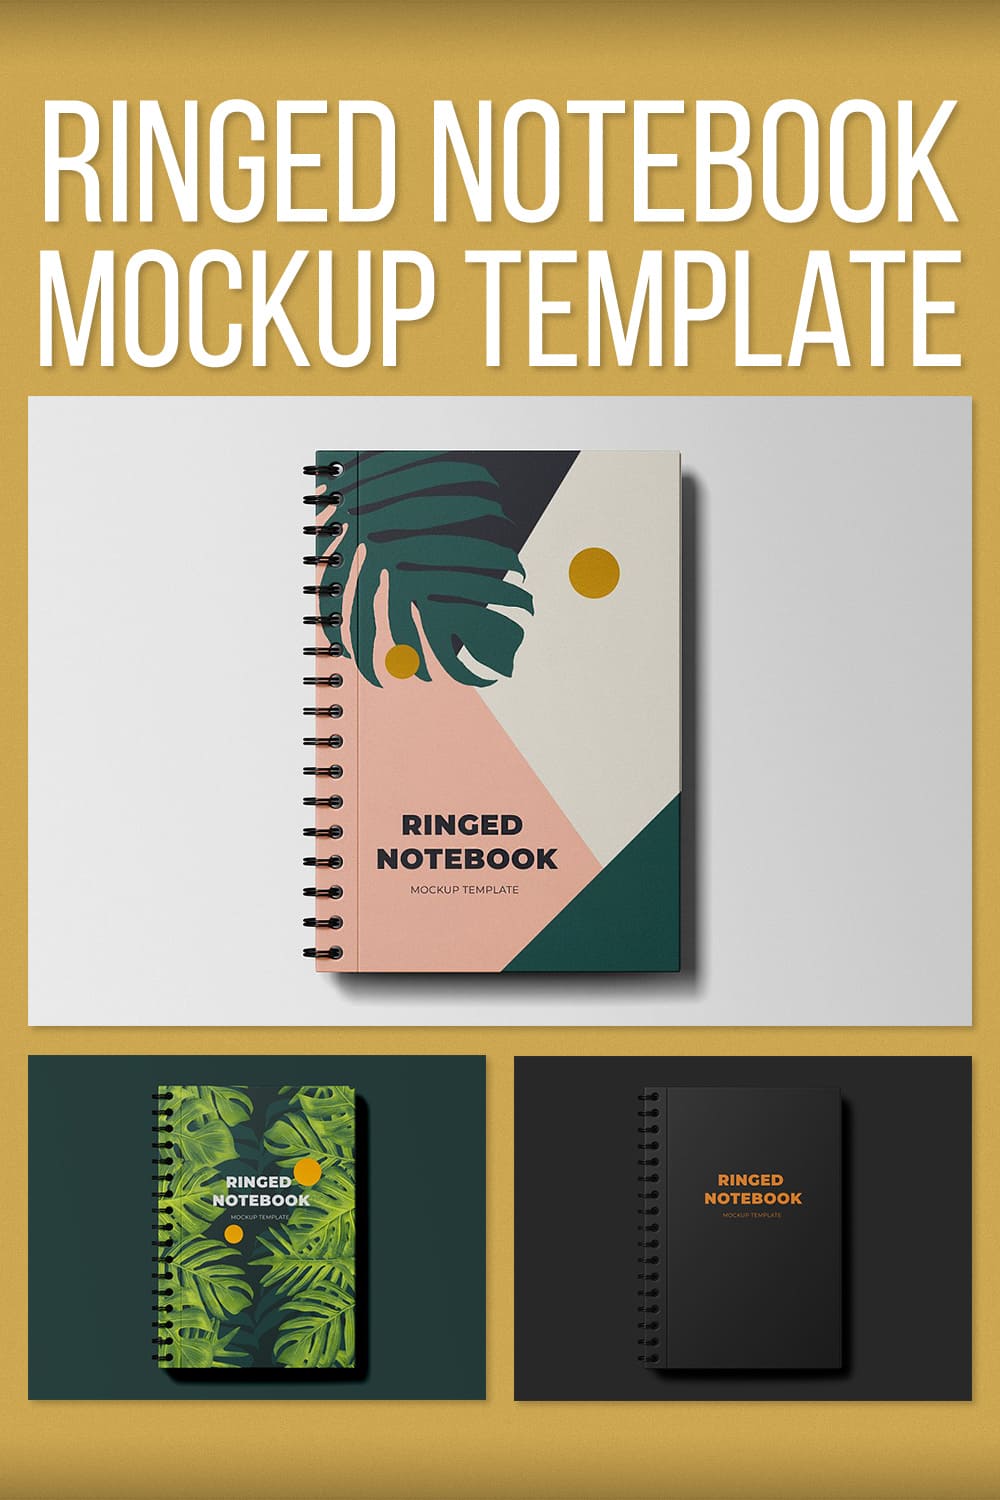 Ringed Notebook Mockup Template - Pinterest.